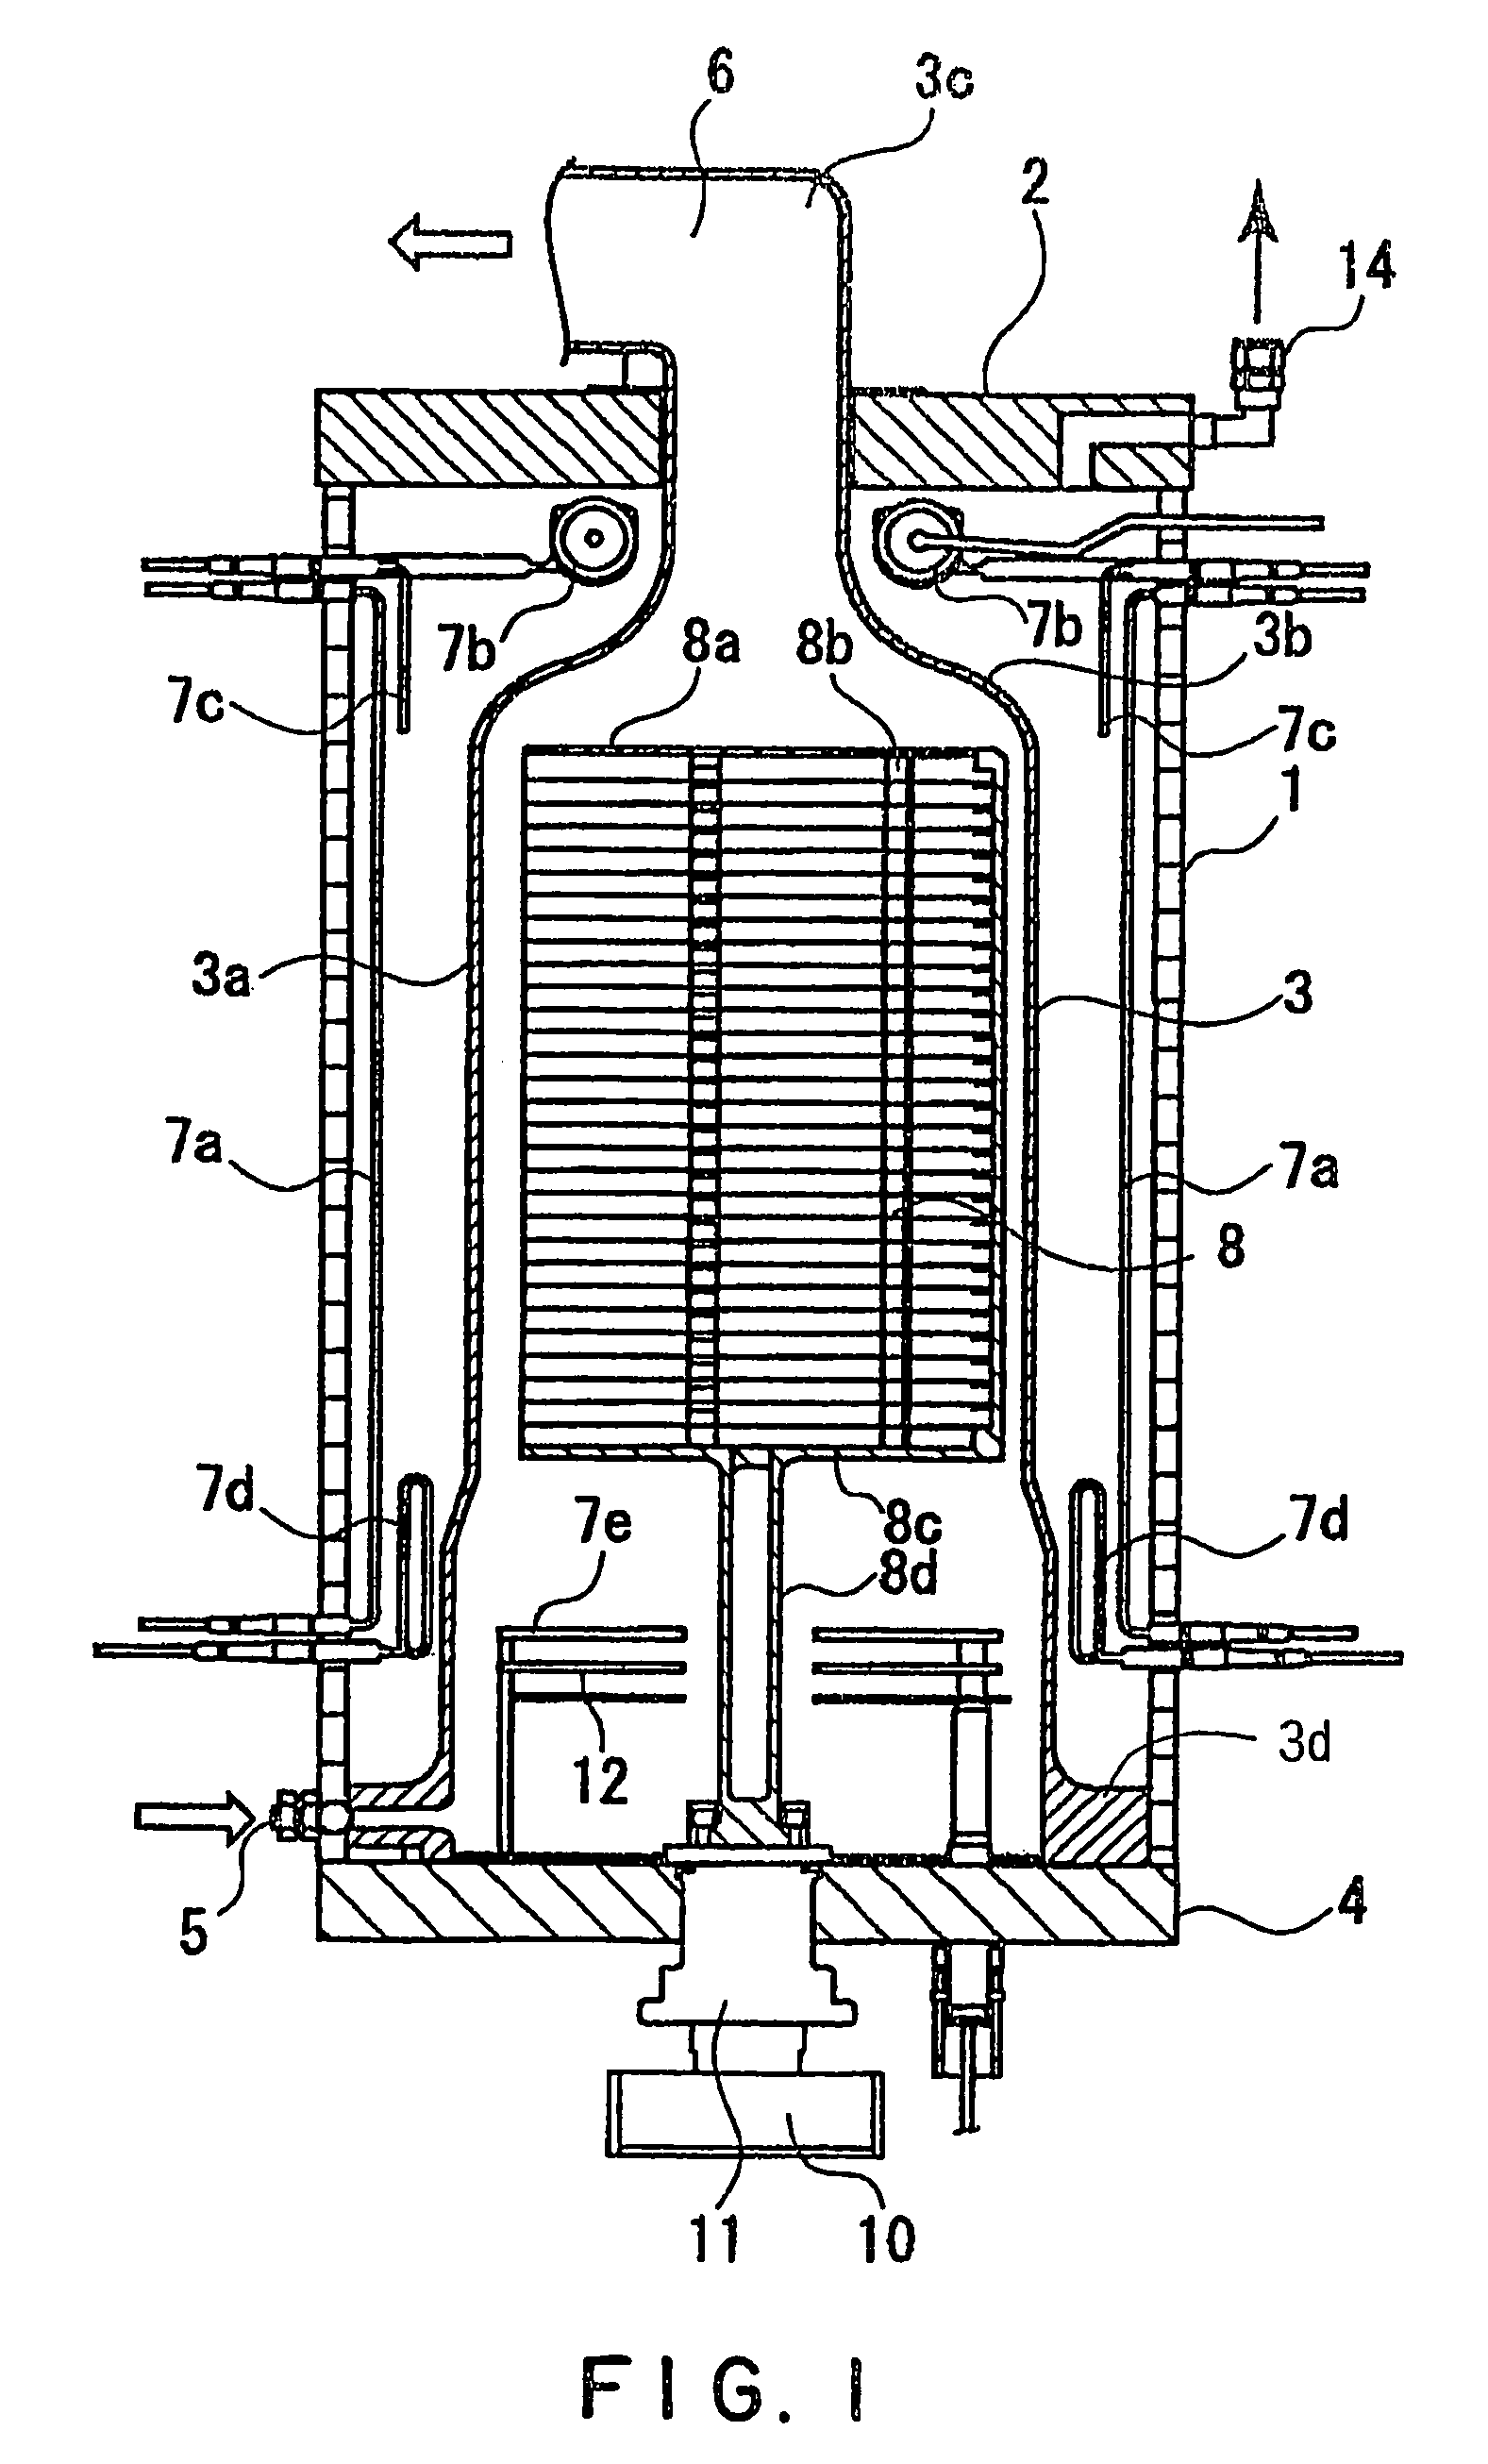 Heat treatment apparatus